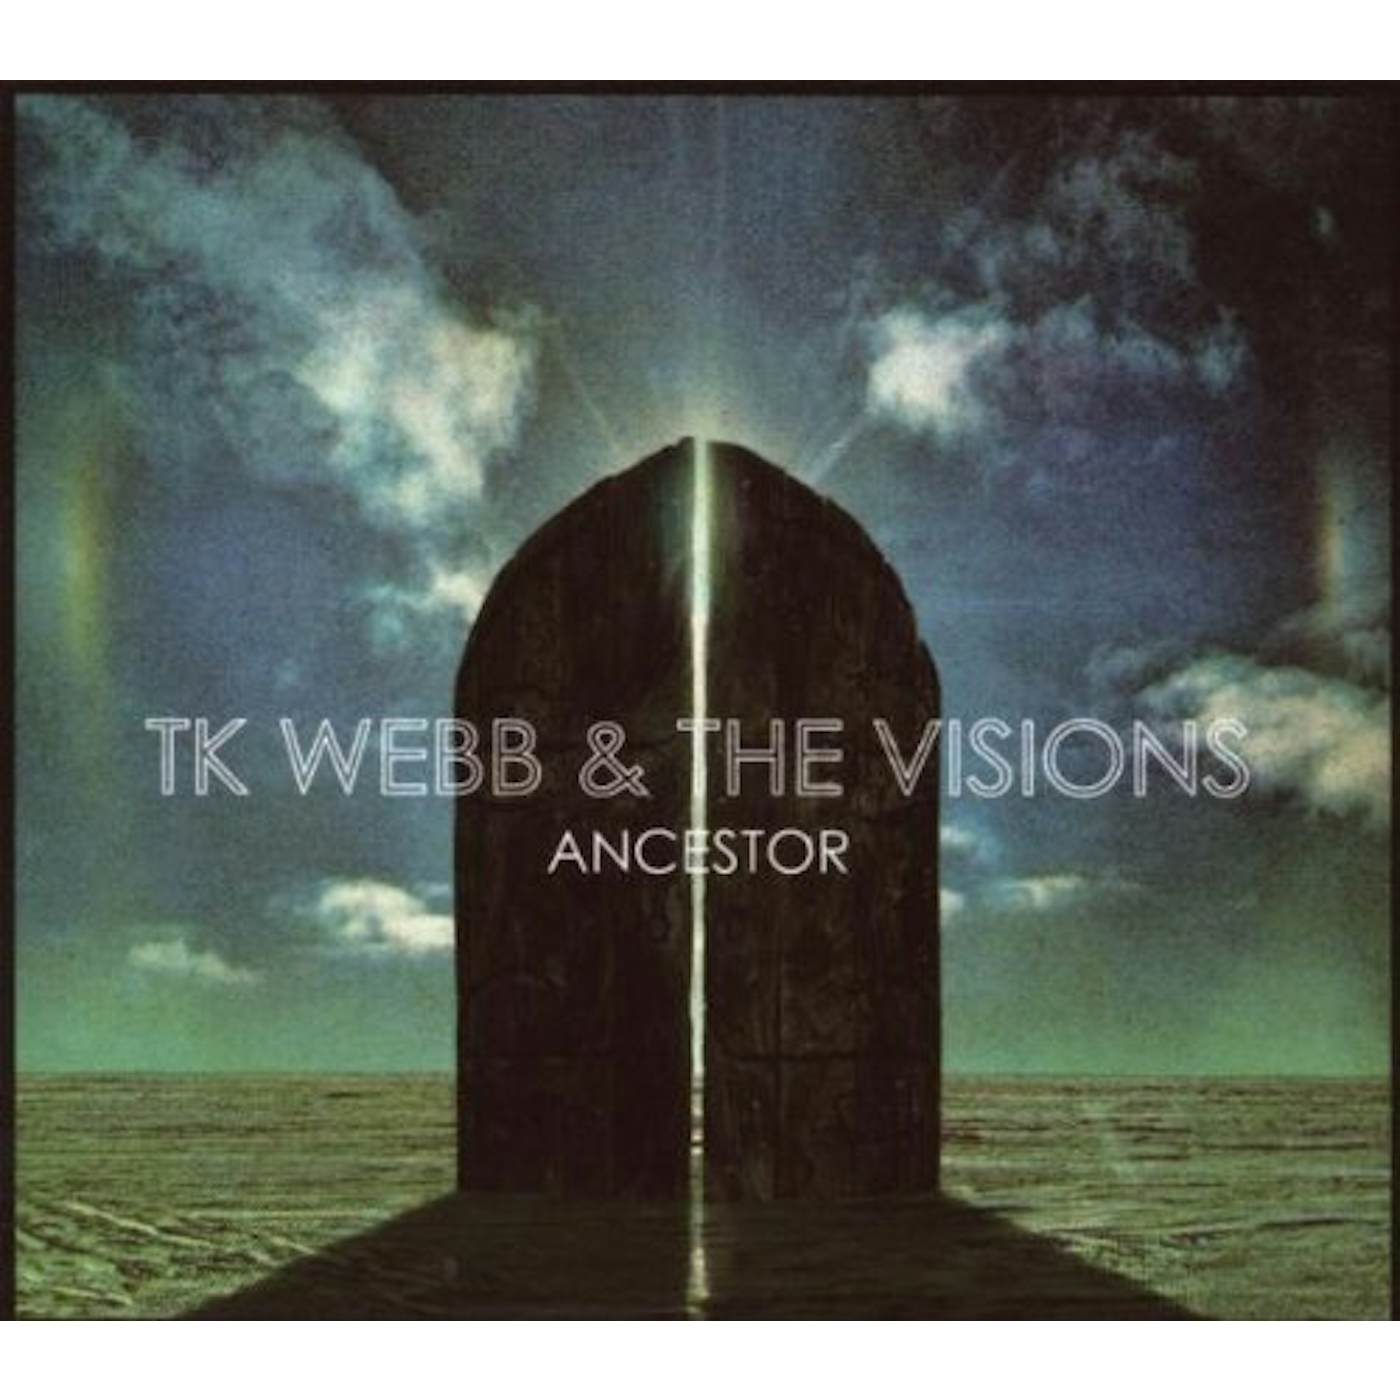 TK Webb & The Visions ANCESTOR CD